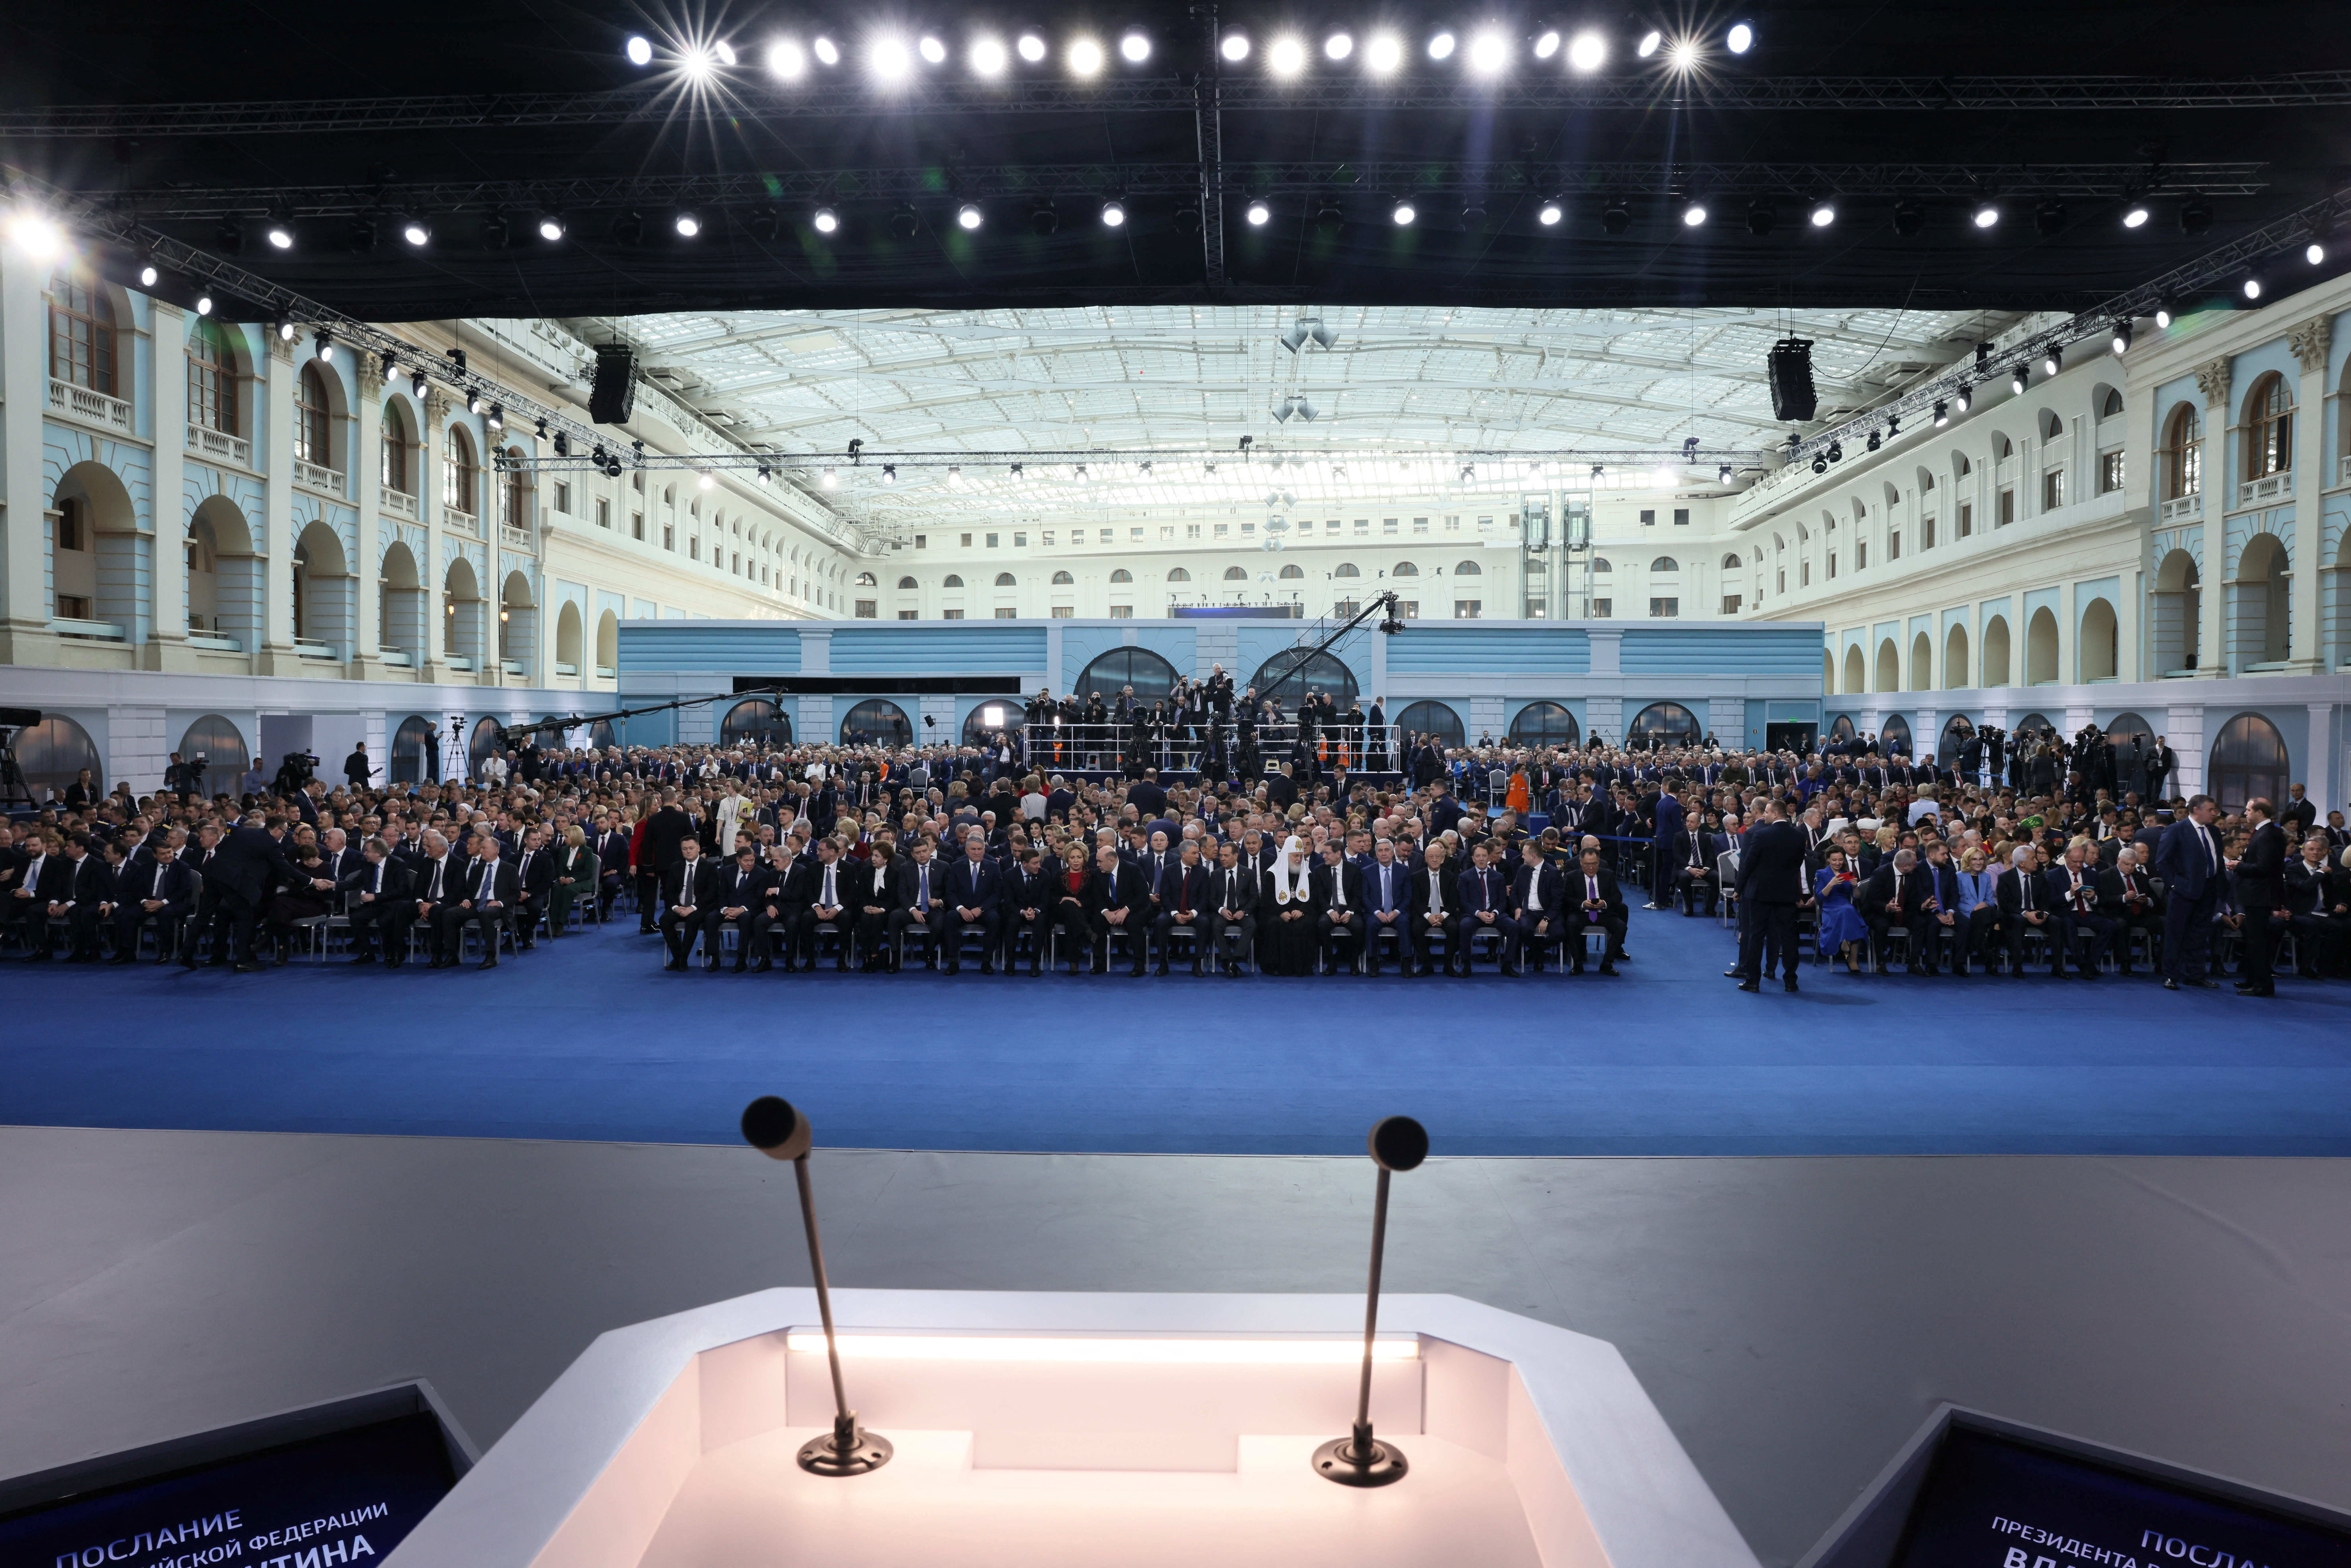 Asistentes al discurso de Putin (Sputnik/Reuters)